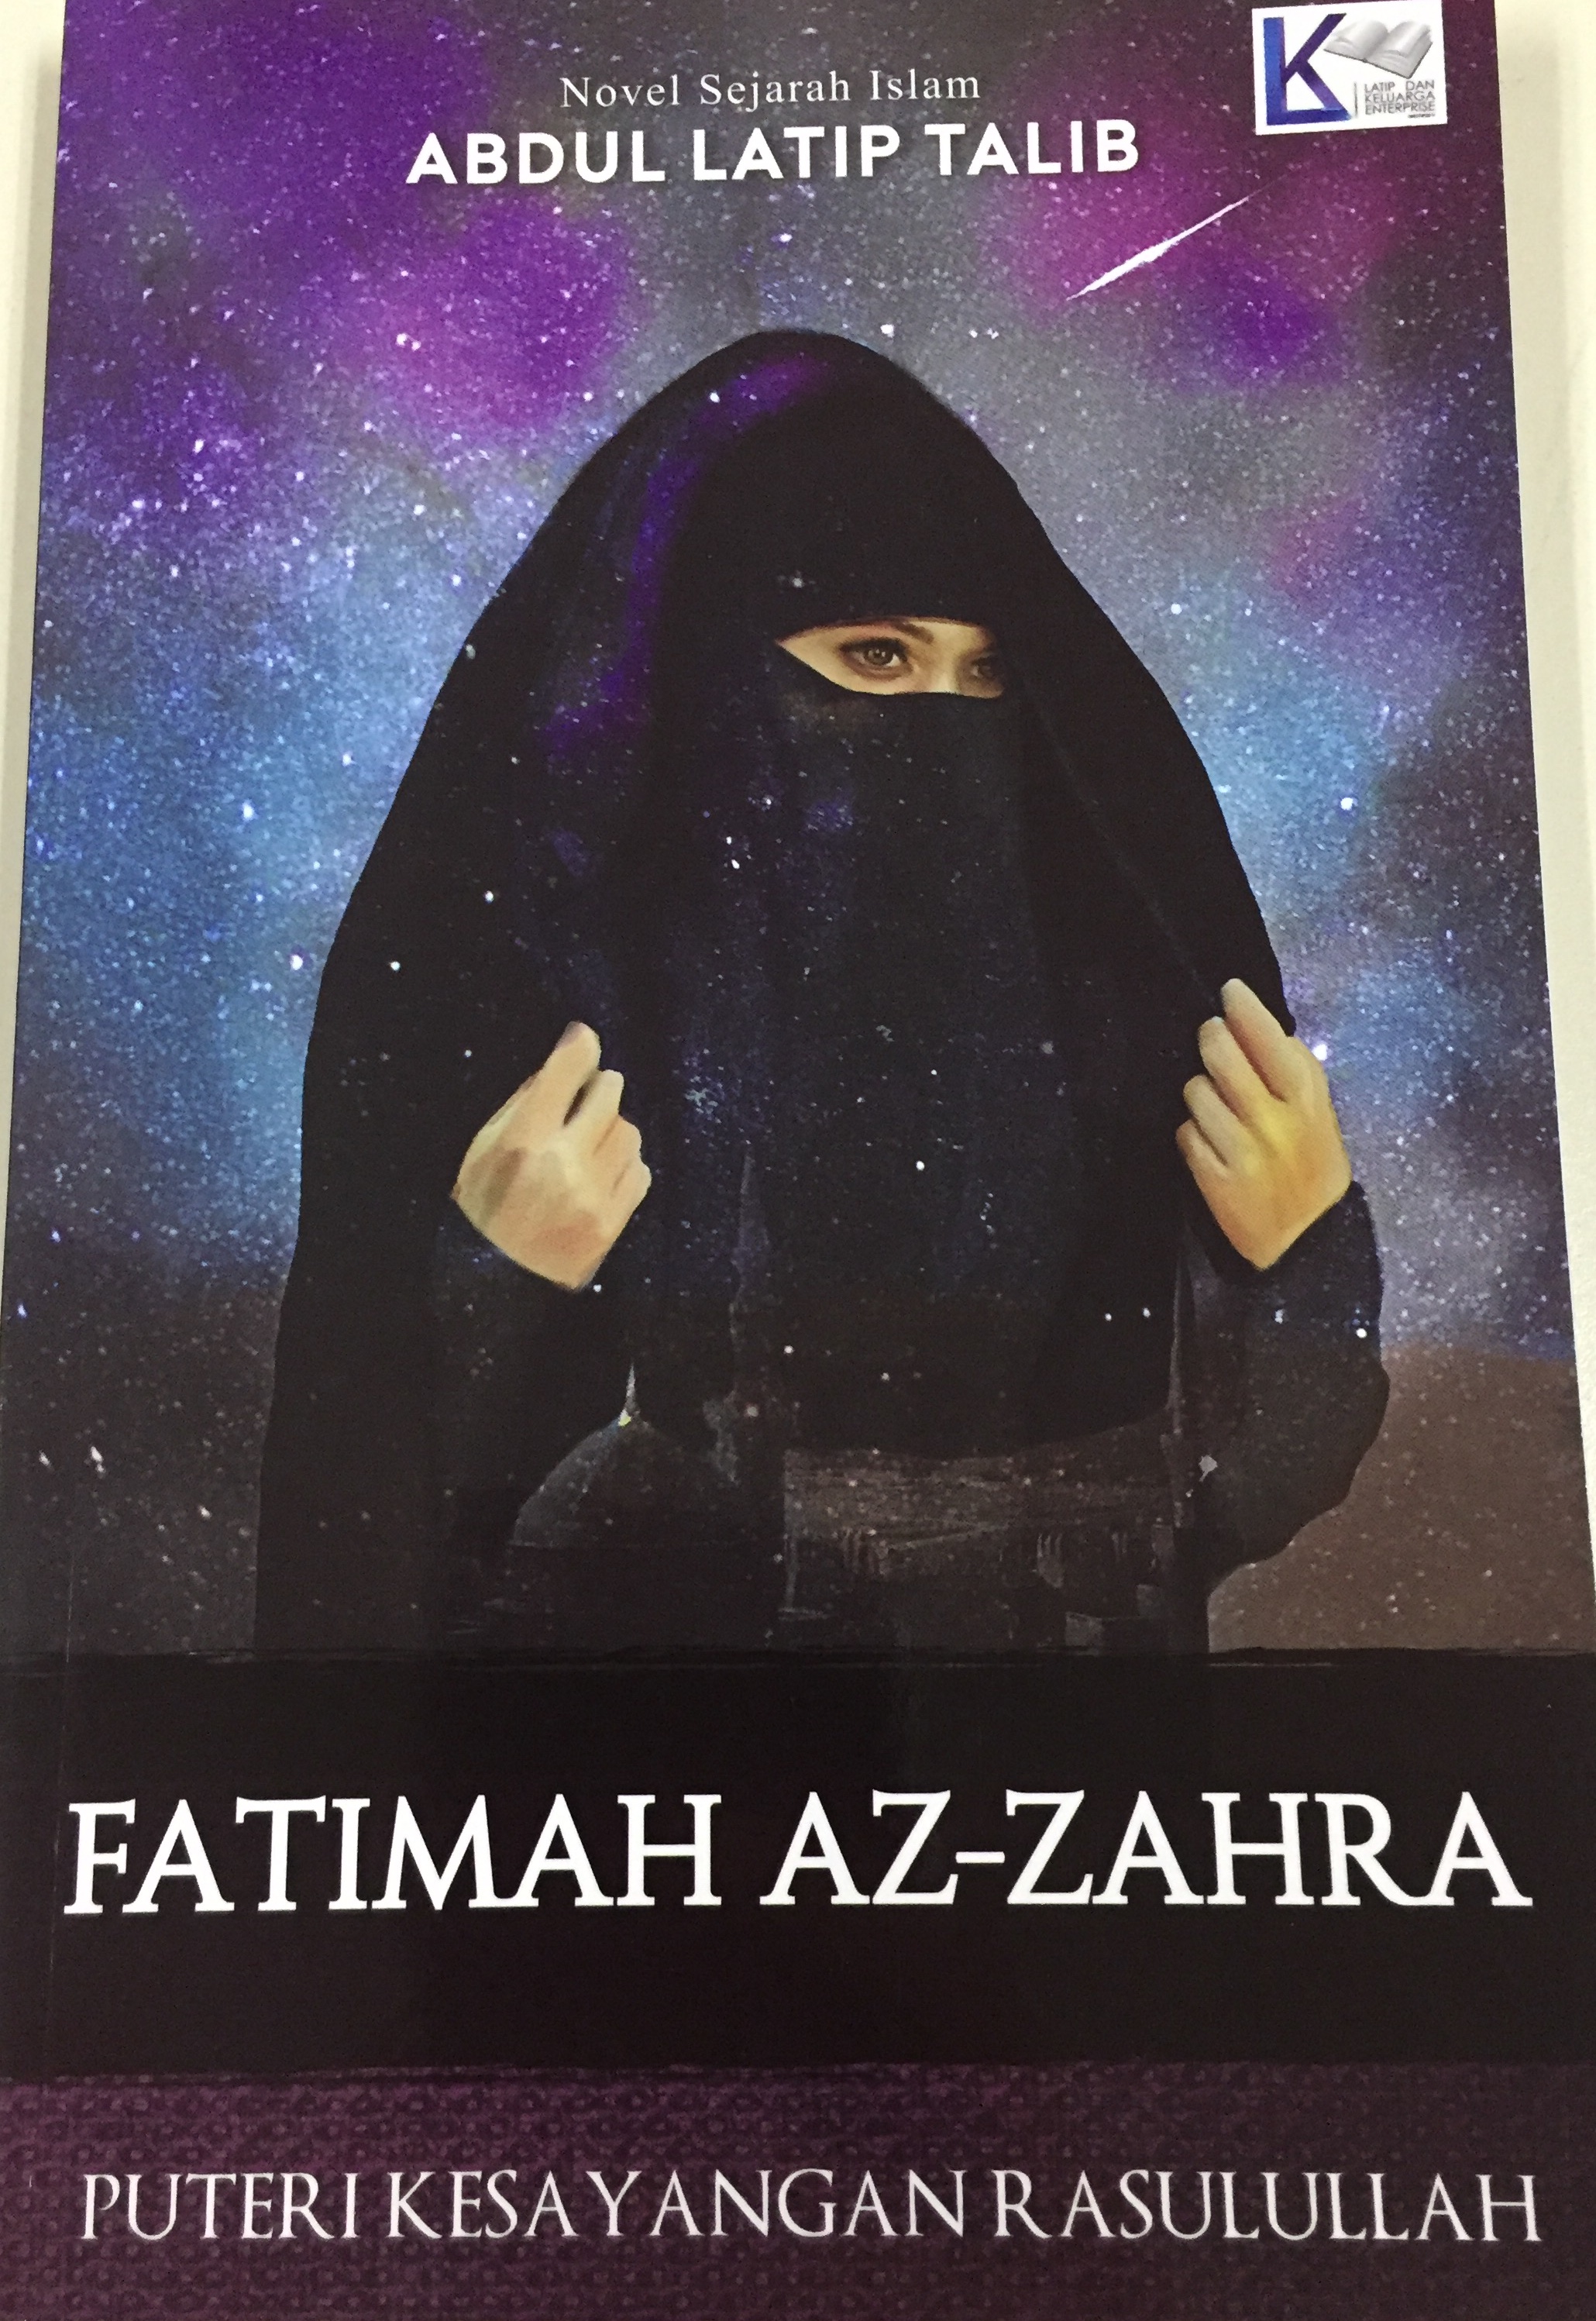 Fatimah az zahra